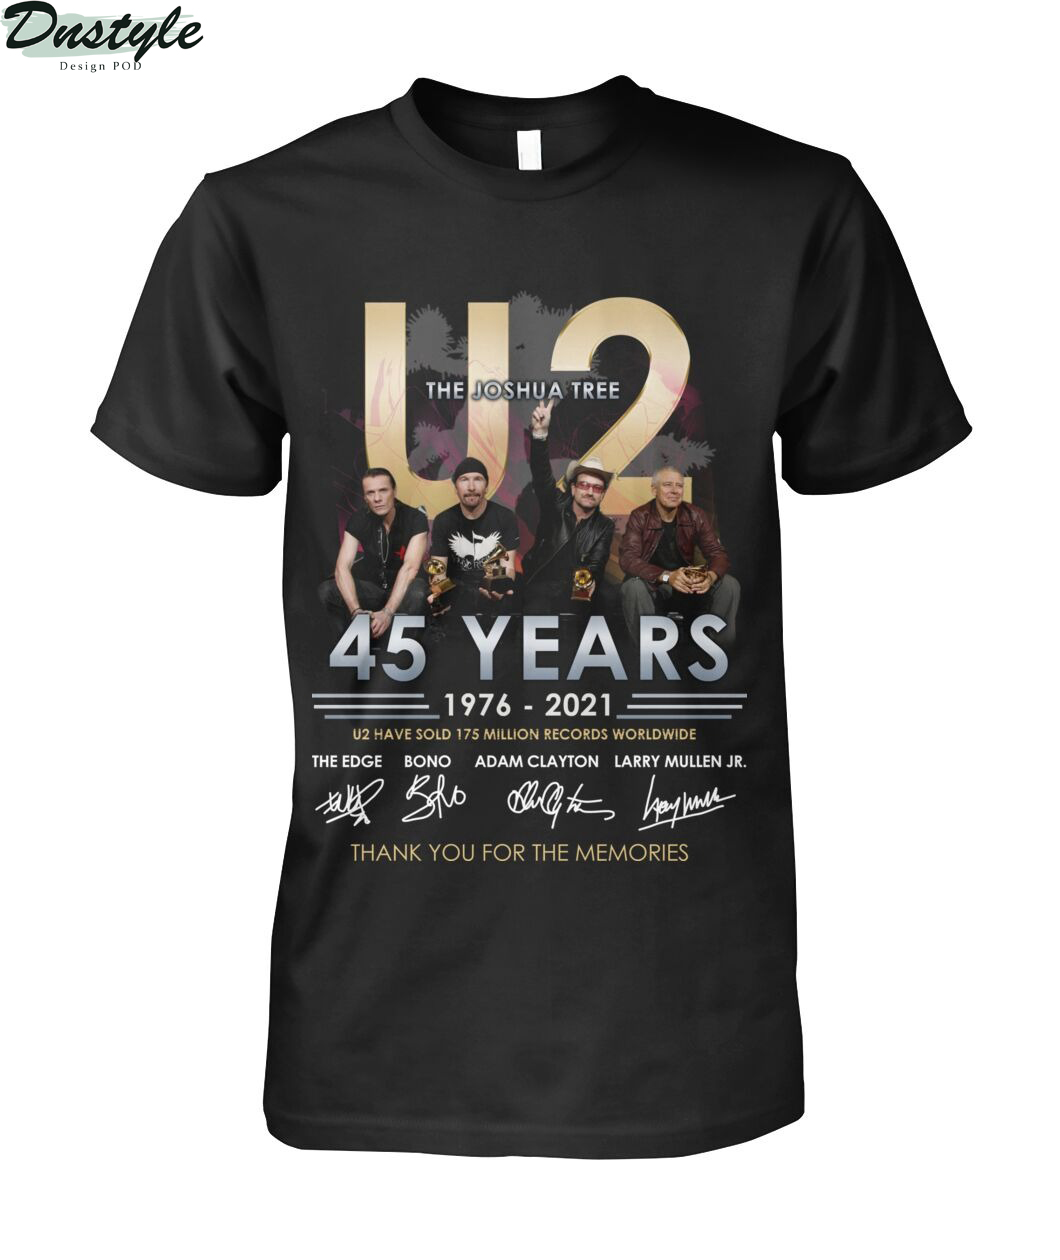 The joshua tree U2 45 years thank you for the memories shirt